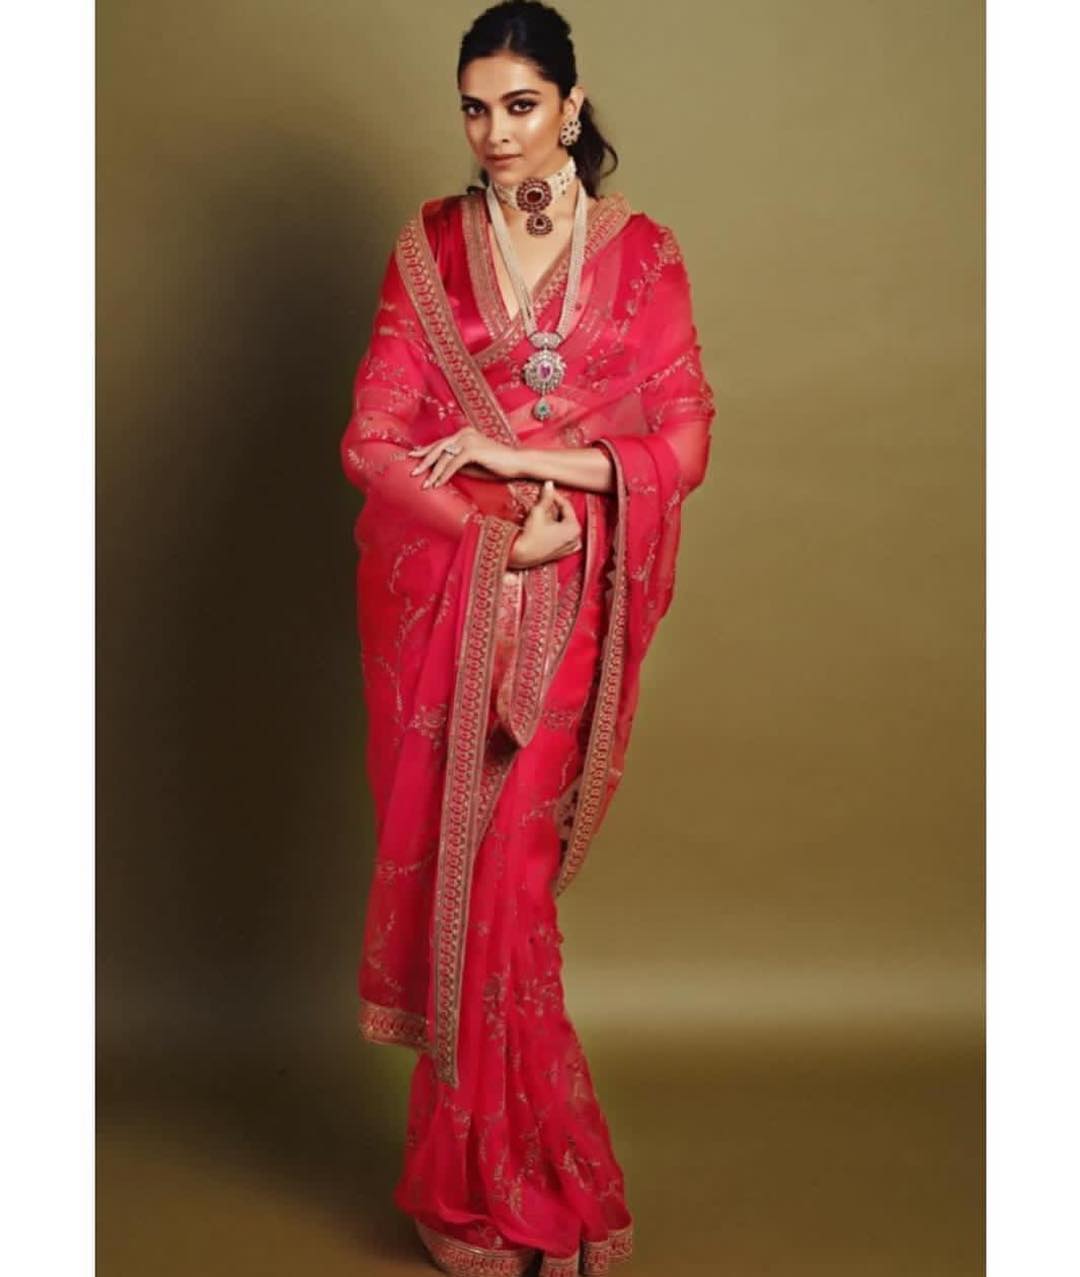 Deepika Padukone keeps it regal in the pink drape.